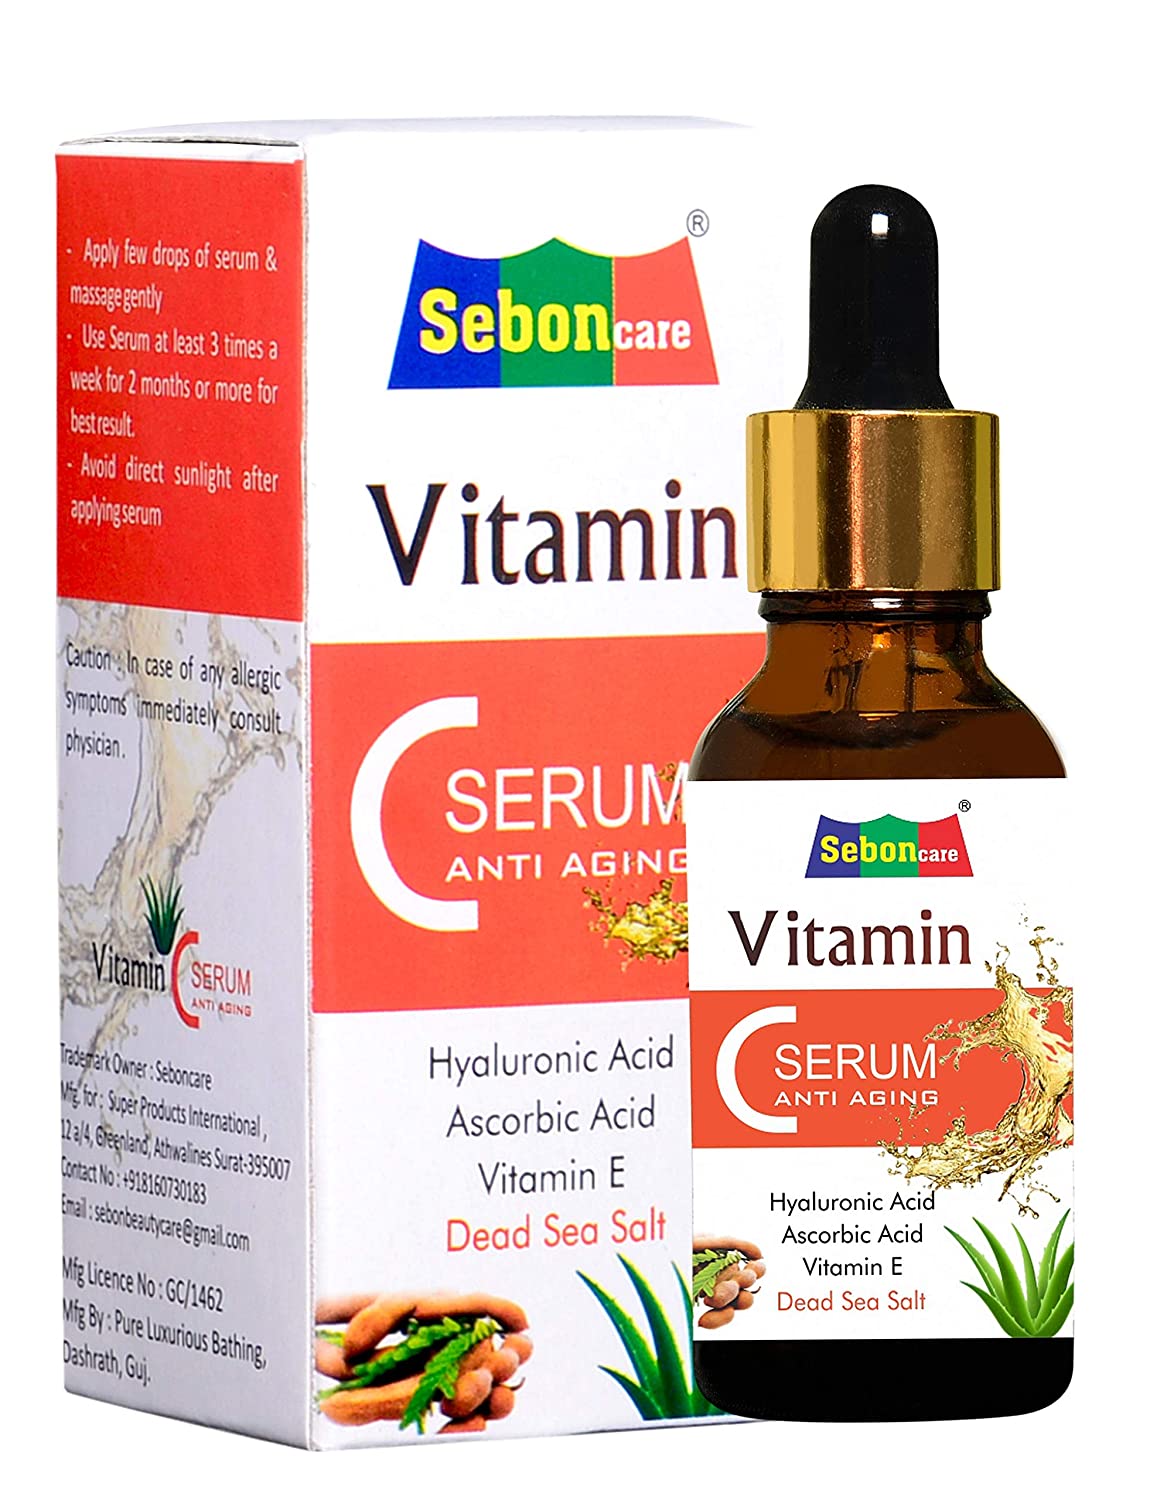 7 Best Vitamin C Serums in India - Indulge